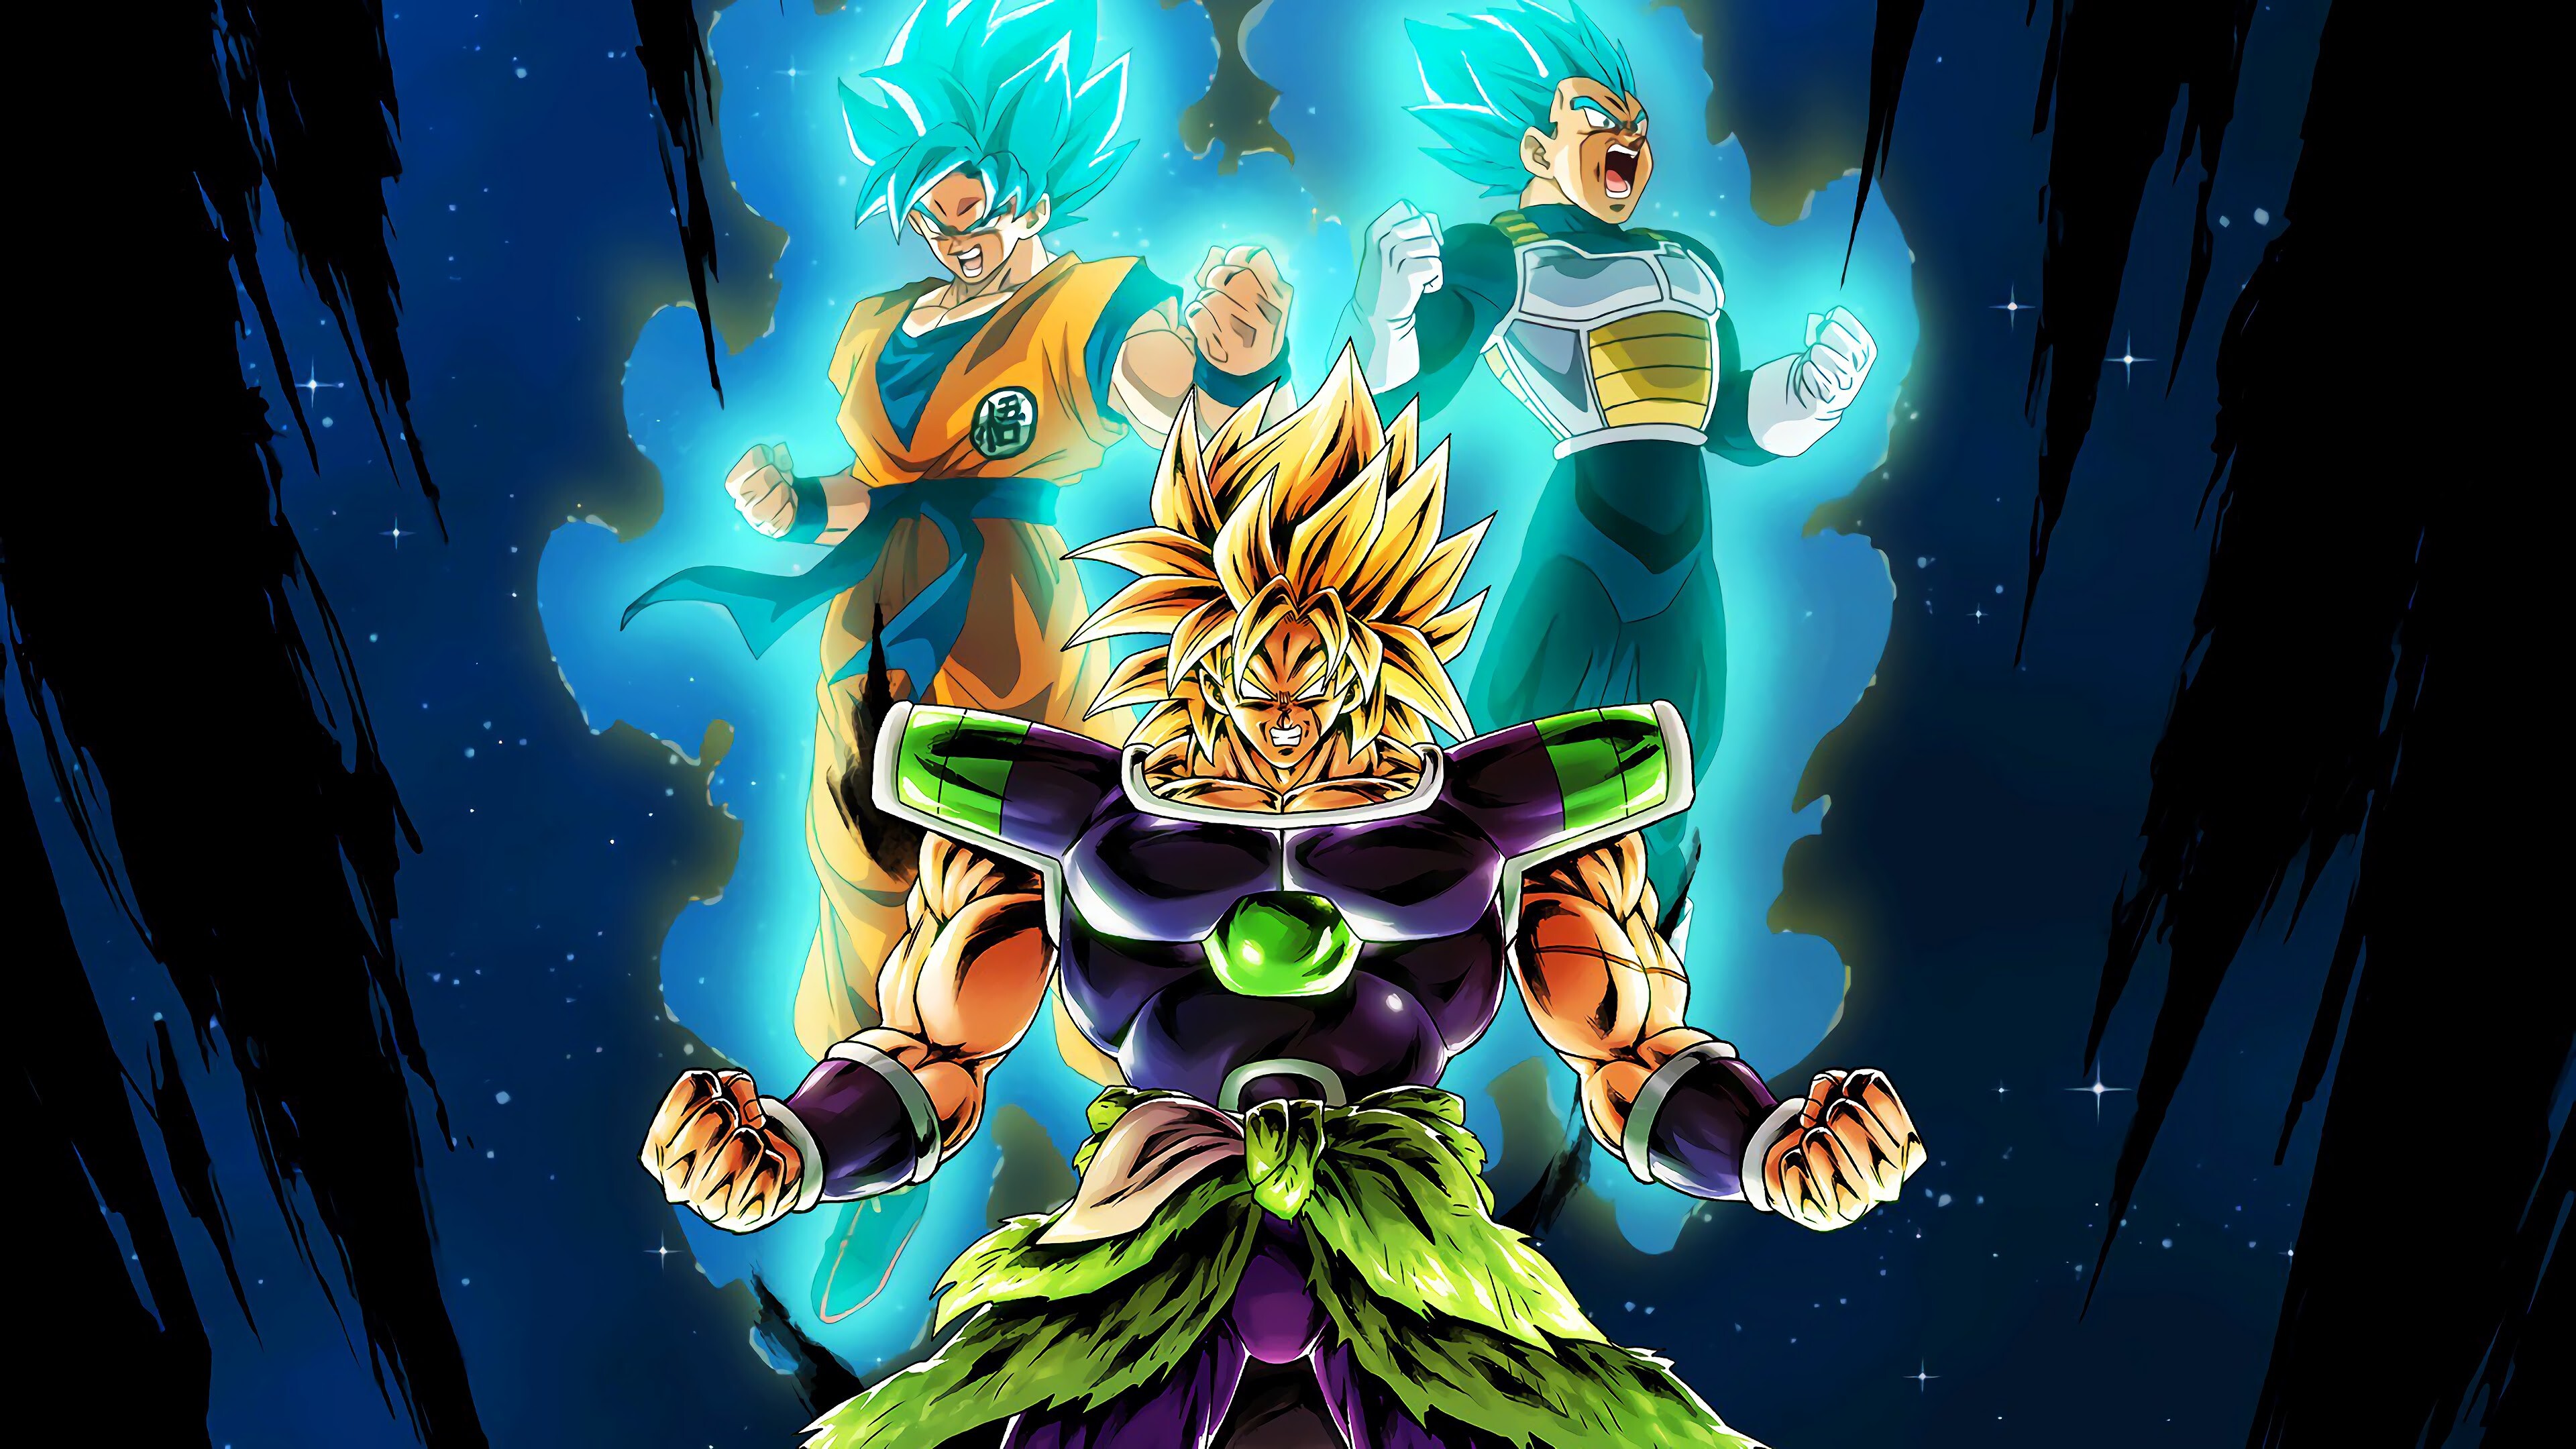 Goku Super Saiyan: Broly and Vegeta, Dragon Ball Super: Broly, The anime fight scene. 3840x2160 4K Wallpaper.